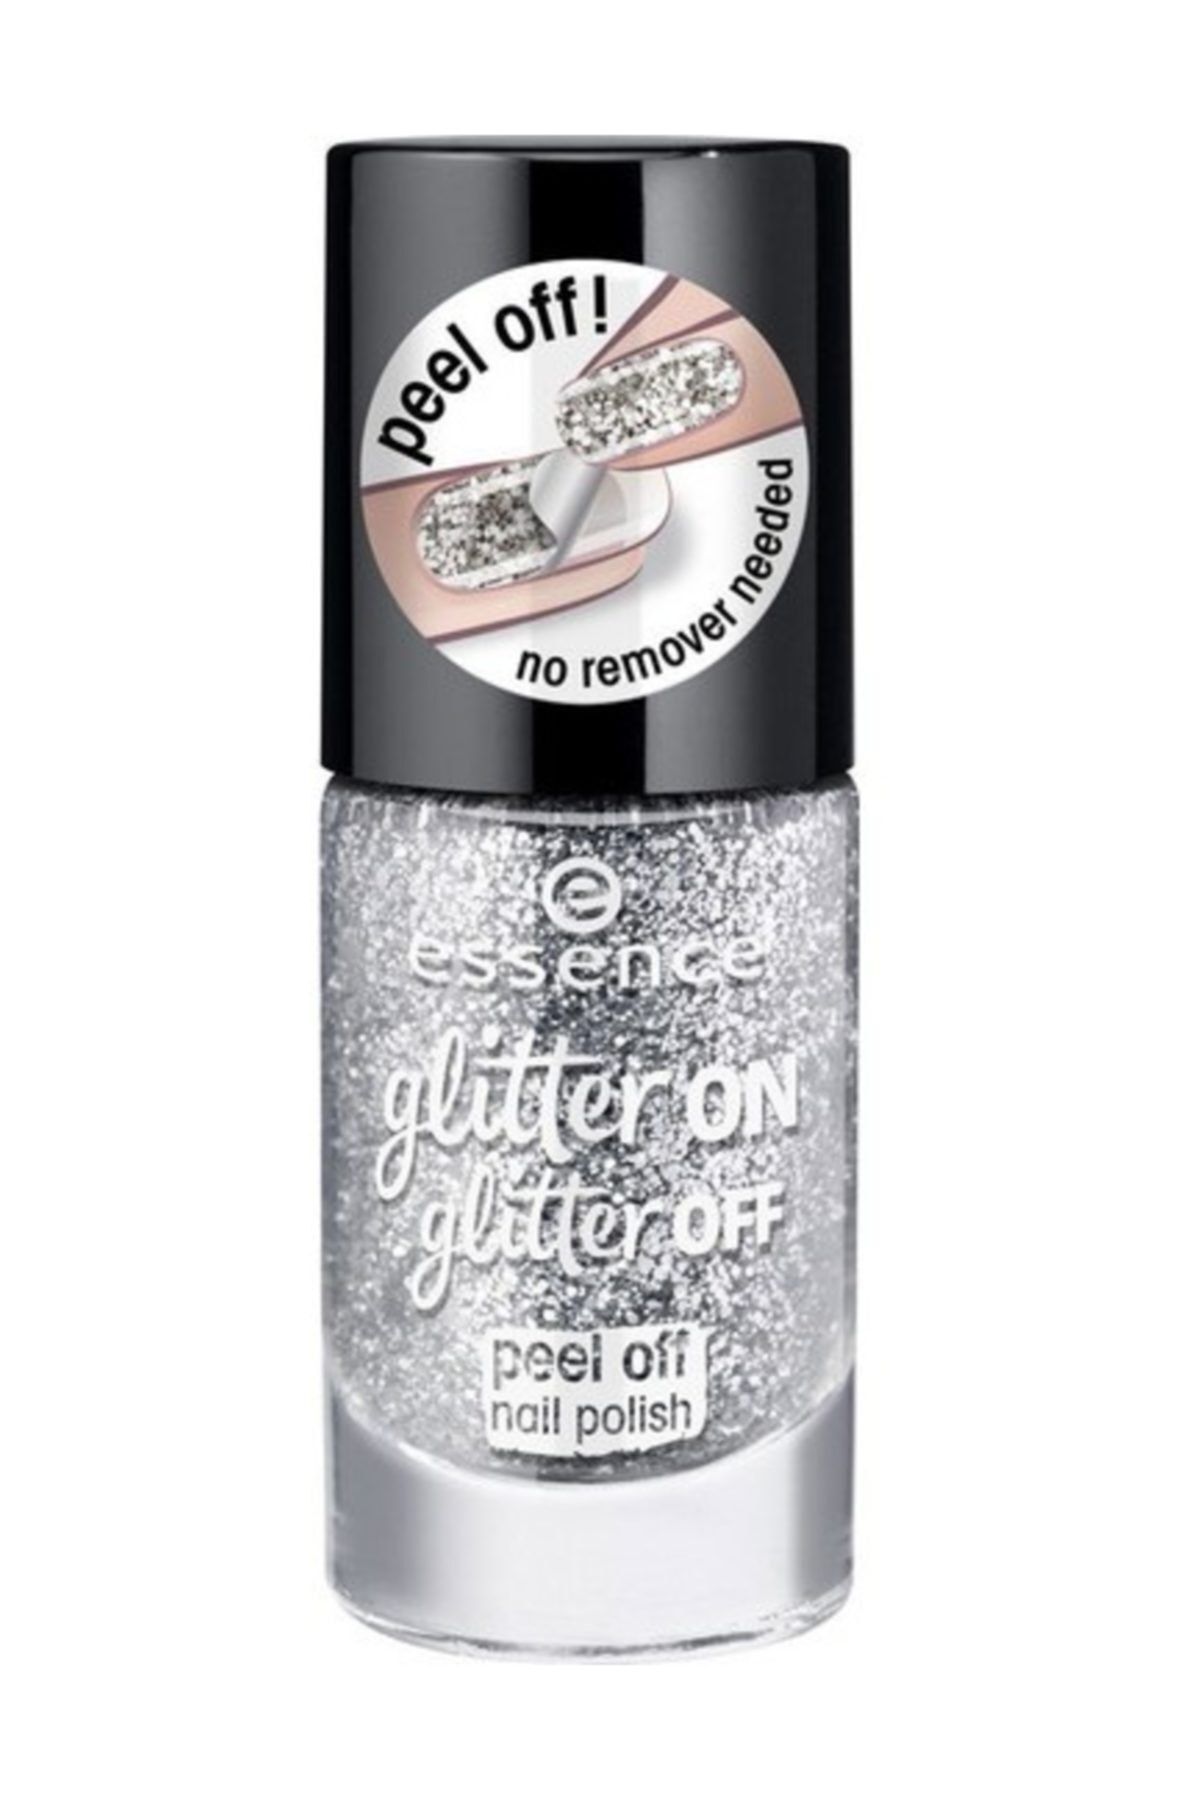 Essence Parıltılı Tırnak Cilası - Glitter On Glitter Off Peel Off Nail Polish 01